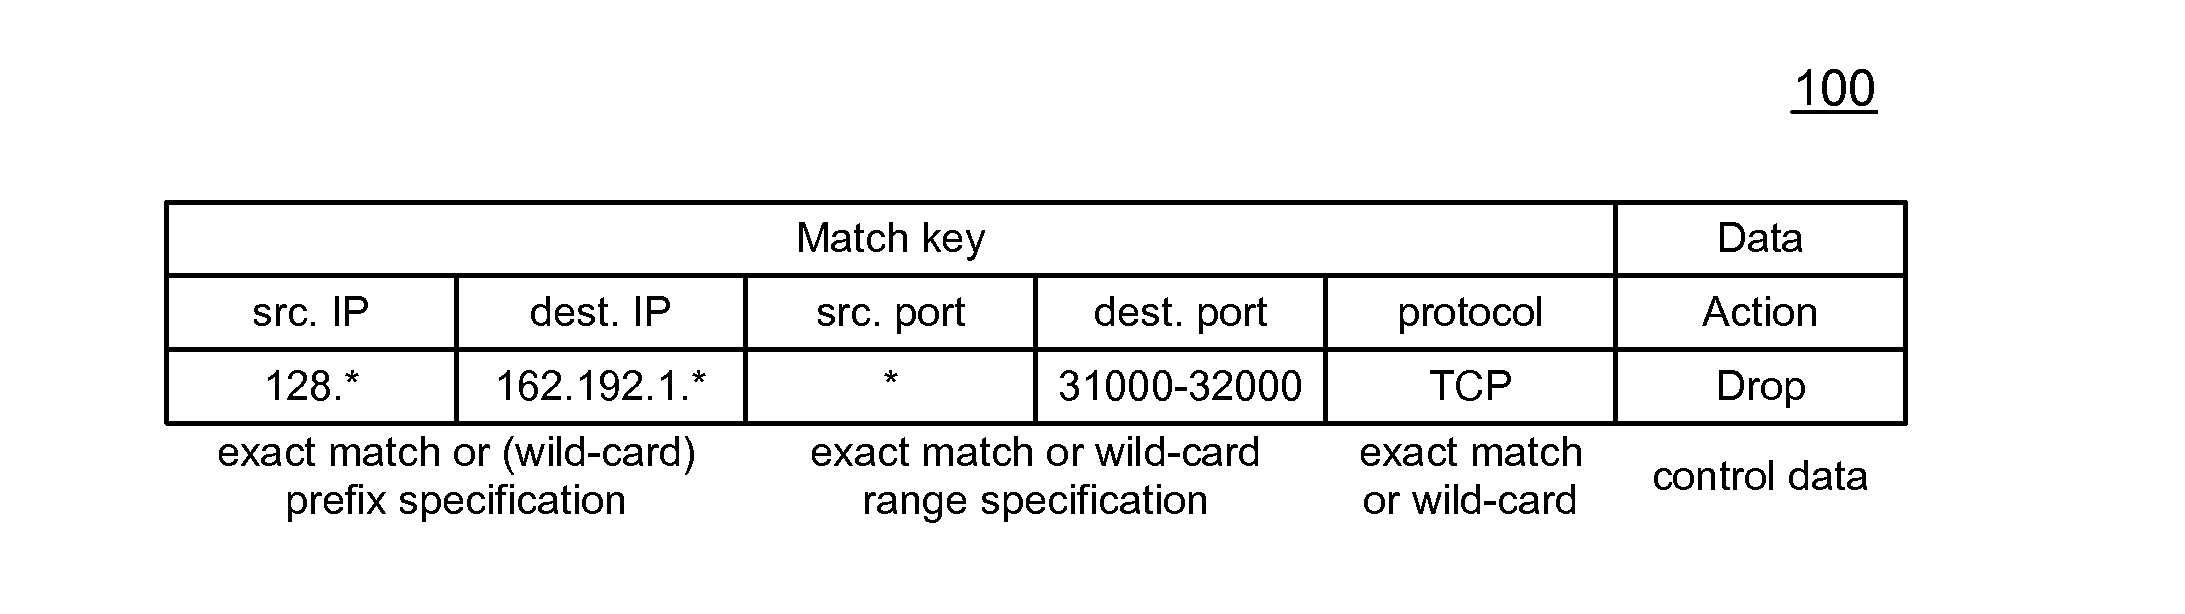 Hybrid wildcard match table